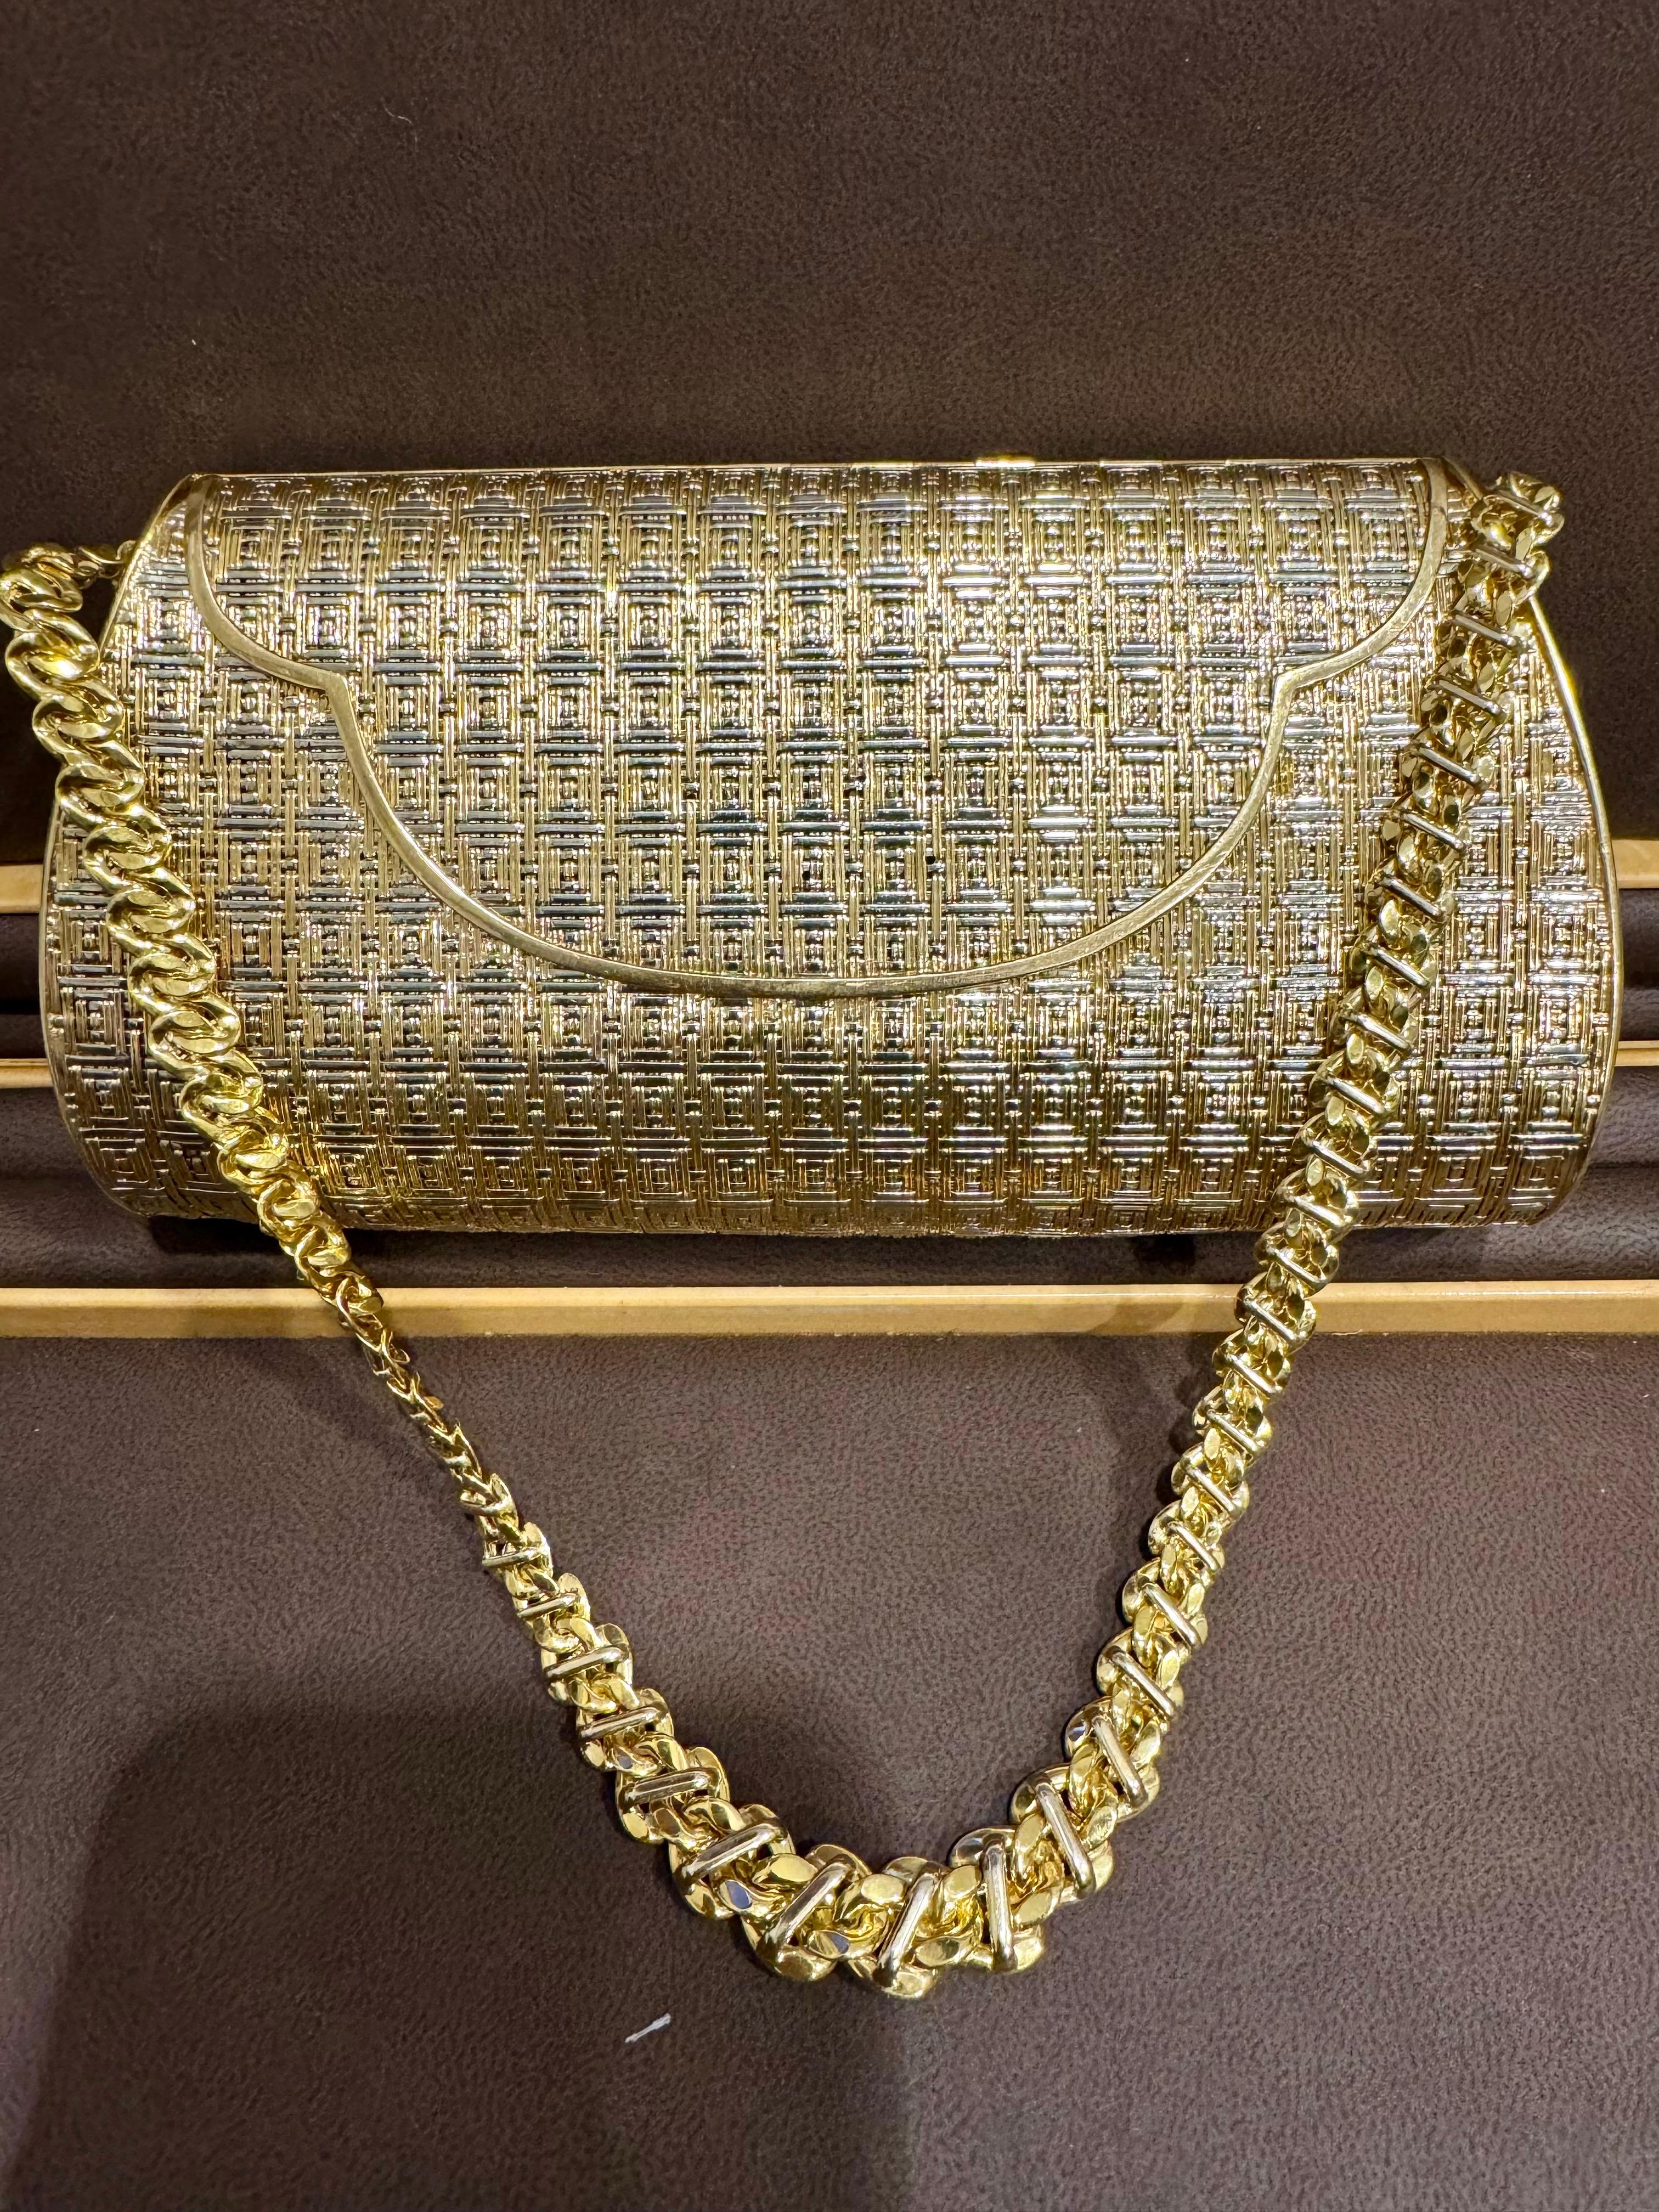 Art Deco  378 Gm of 18 Karat Yellow Gold Mesh Clutch Handbag with Shoulder Chain, Vintage